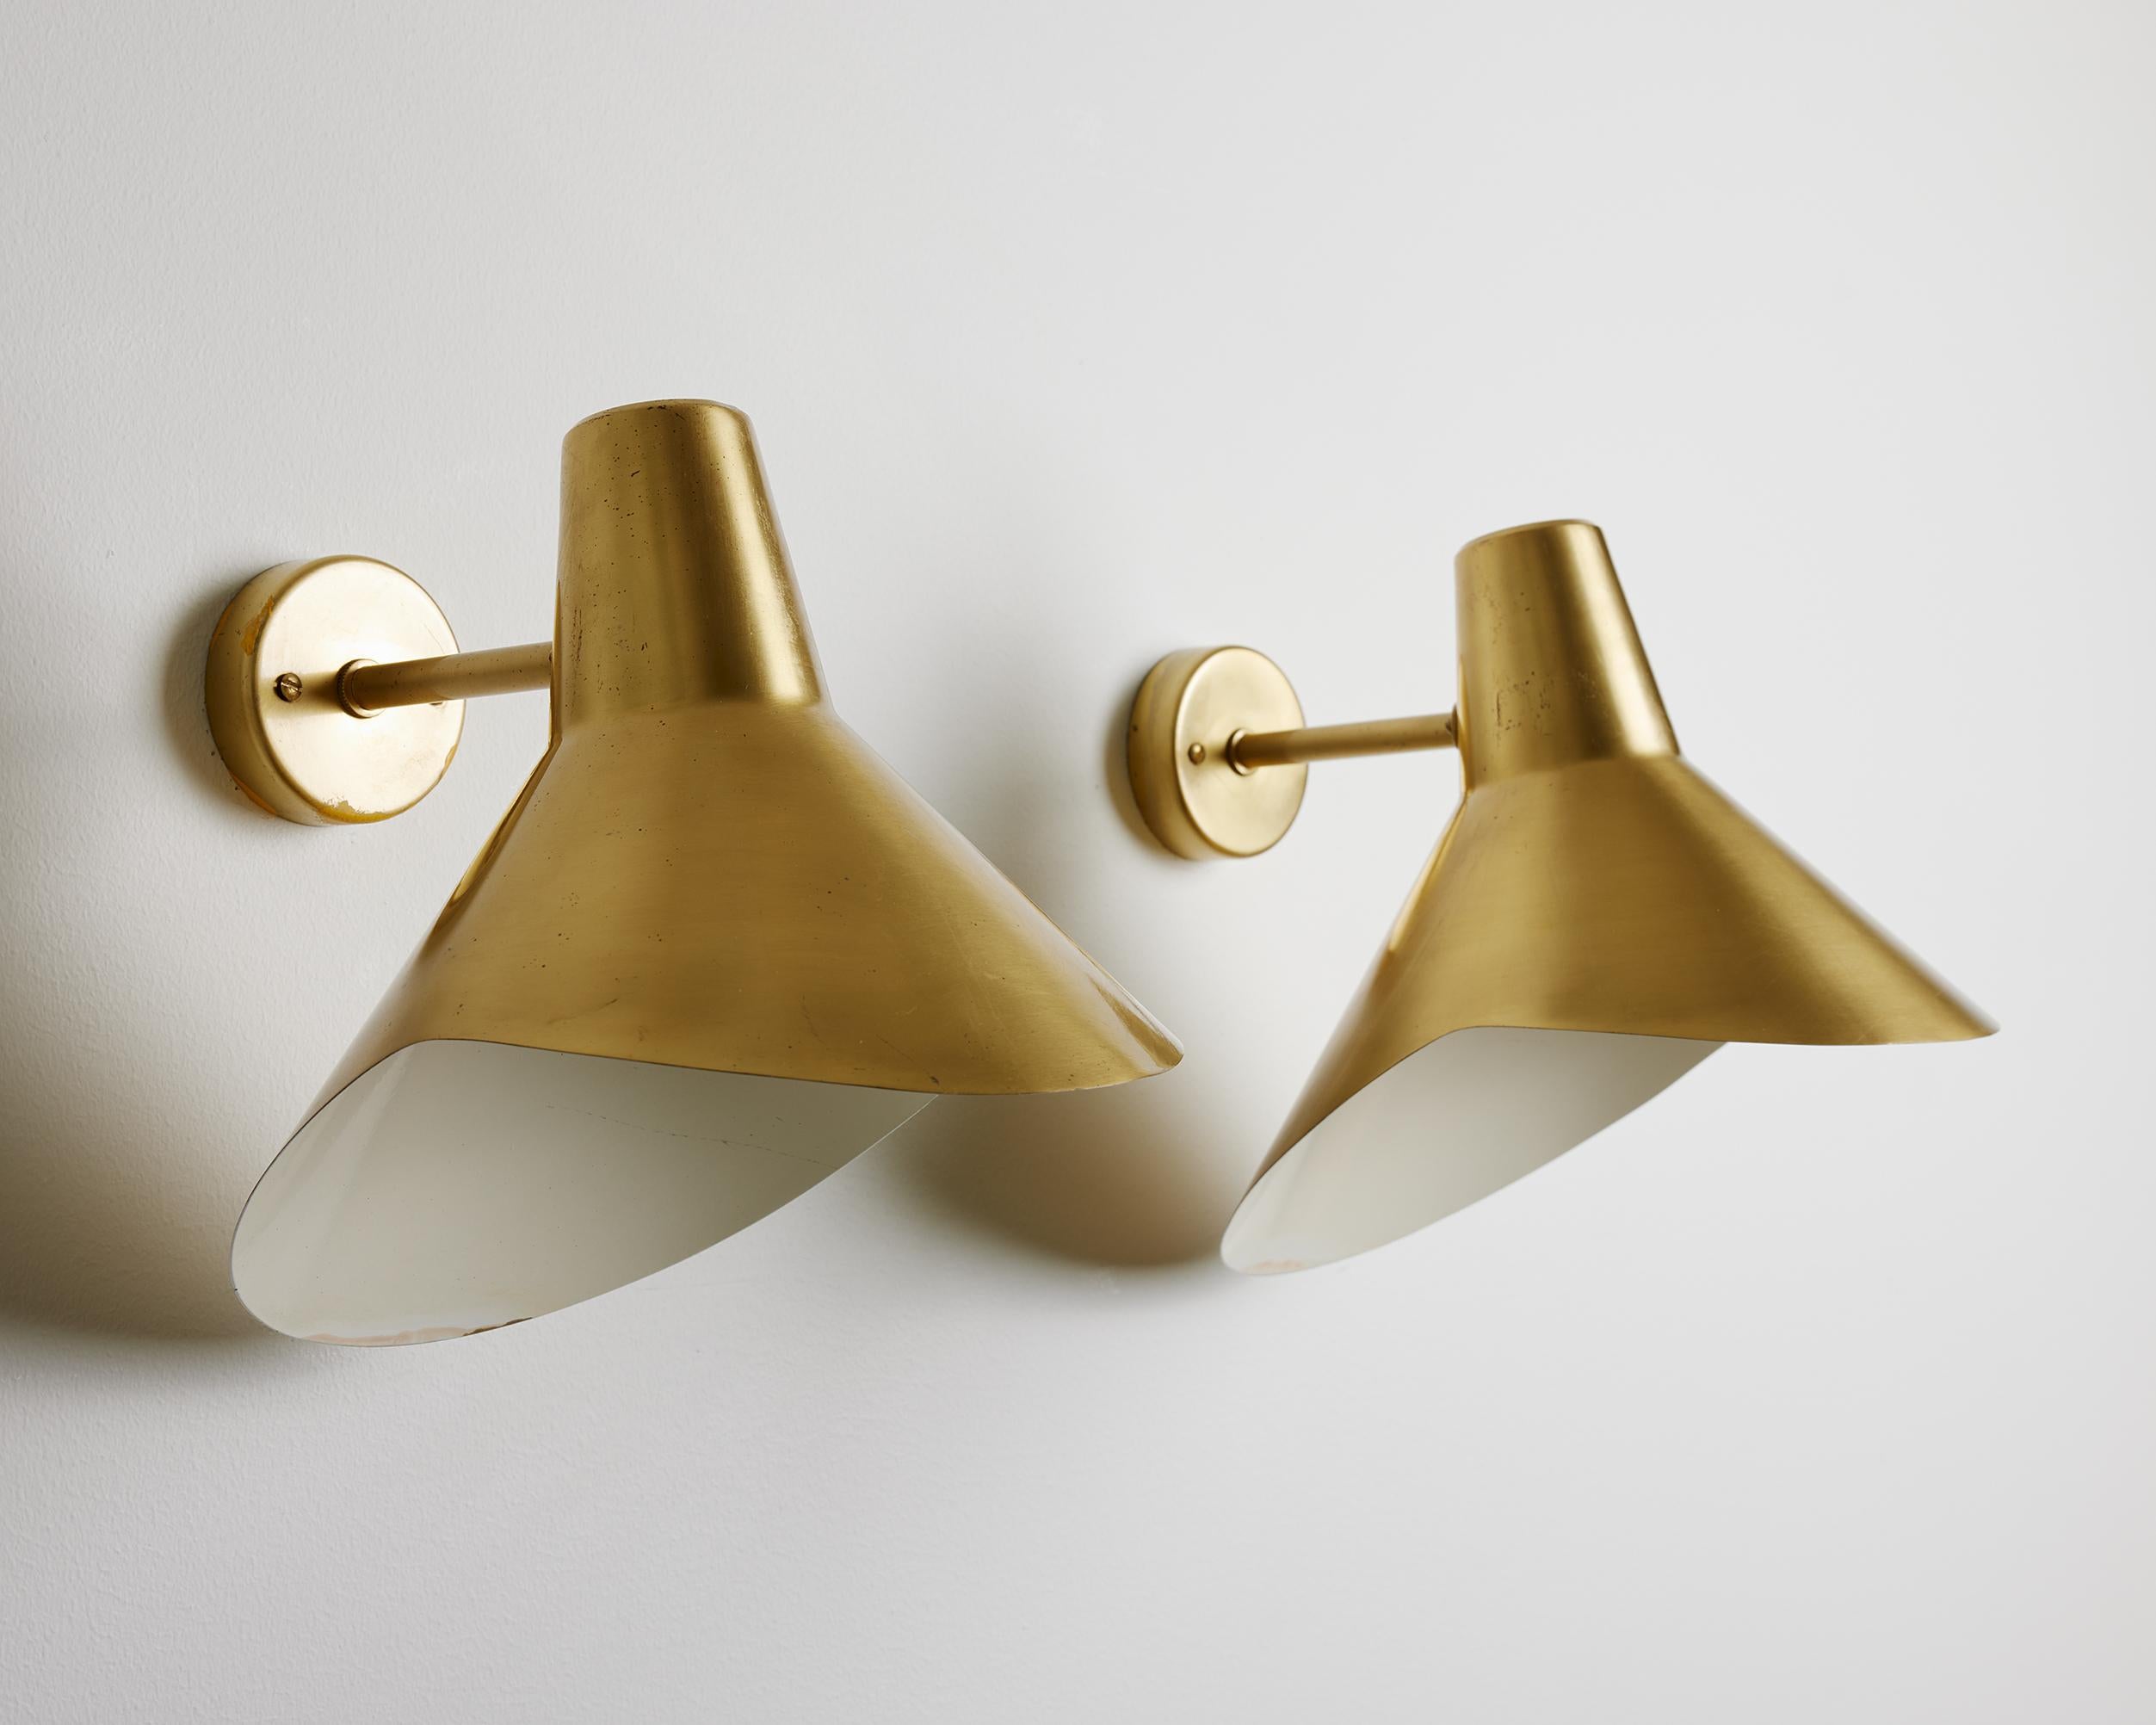 Pair of wall lamps model V319 designed by Hans Bergström for Ateljé Lyktan,
Sweden, 1947.

Brass.

Measurements: 
W: 20 cm / 8''
D: 26 cm / 10 1/4''